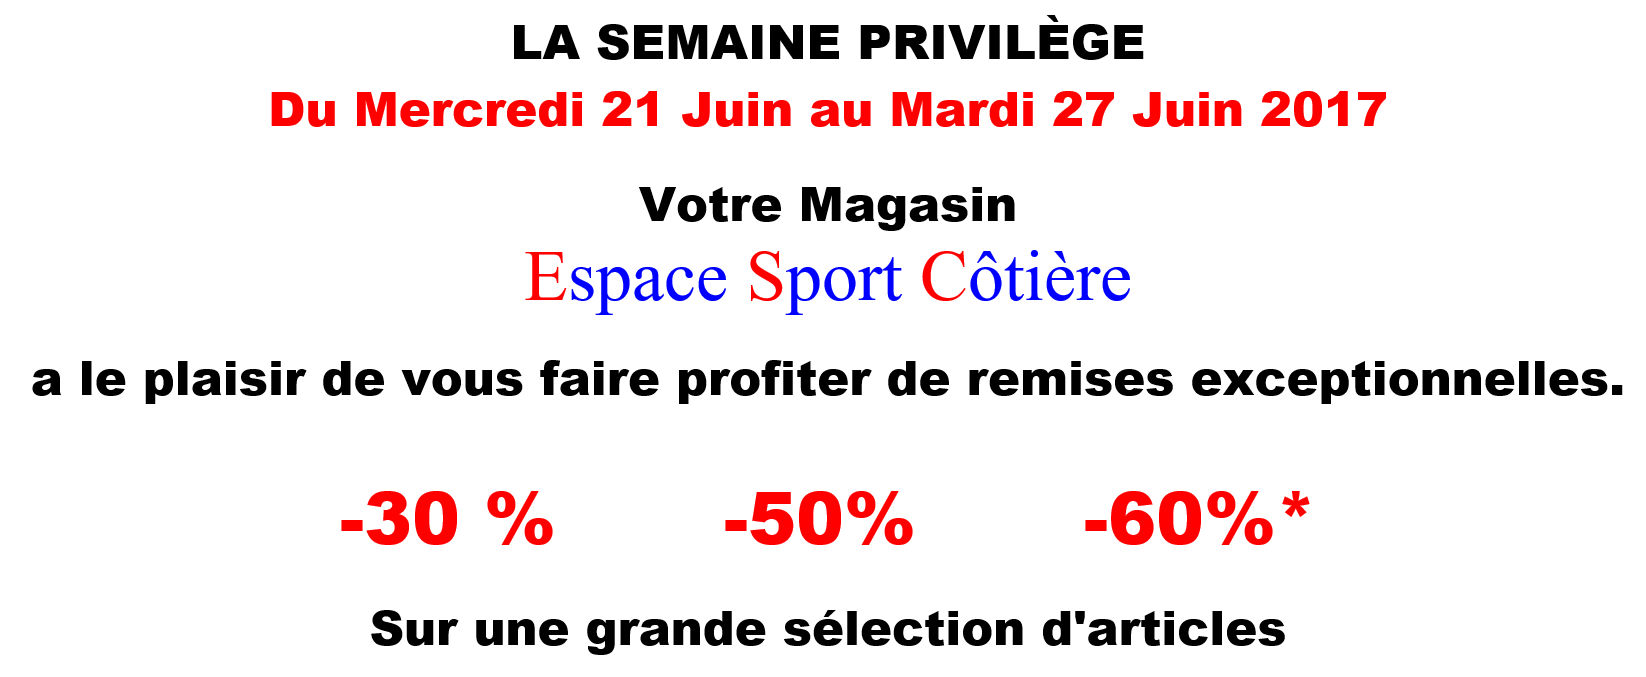 Espace Sport Côtière - SEMAINE PRIVILÈGE du 21 au 27 juin, jusqu'à -60% !